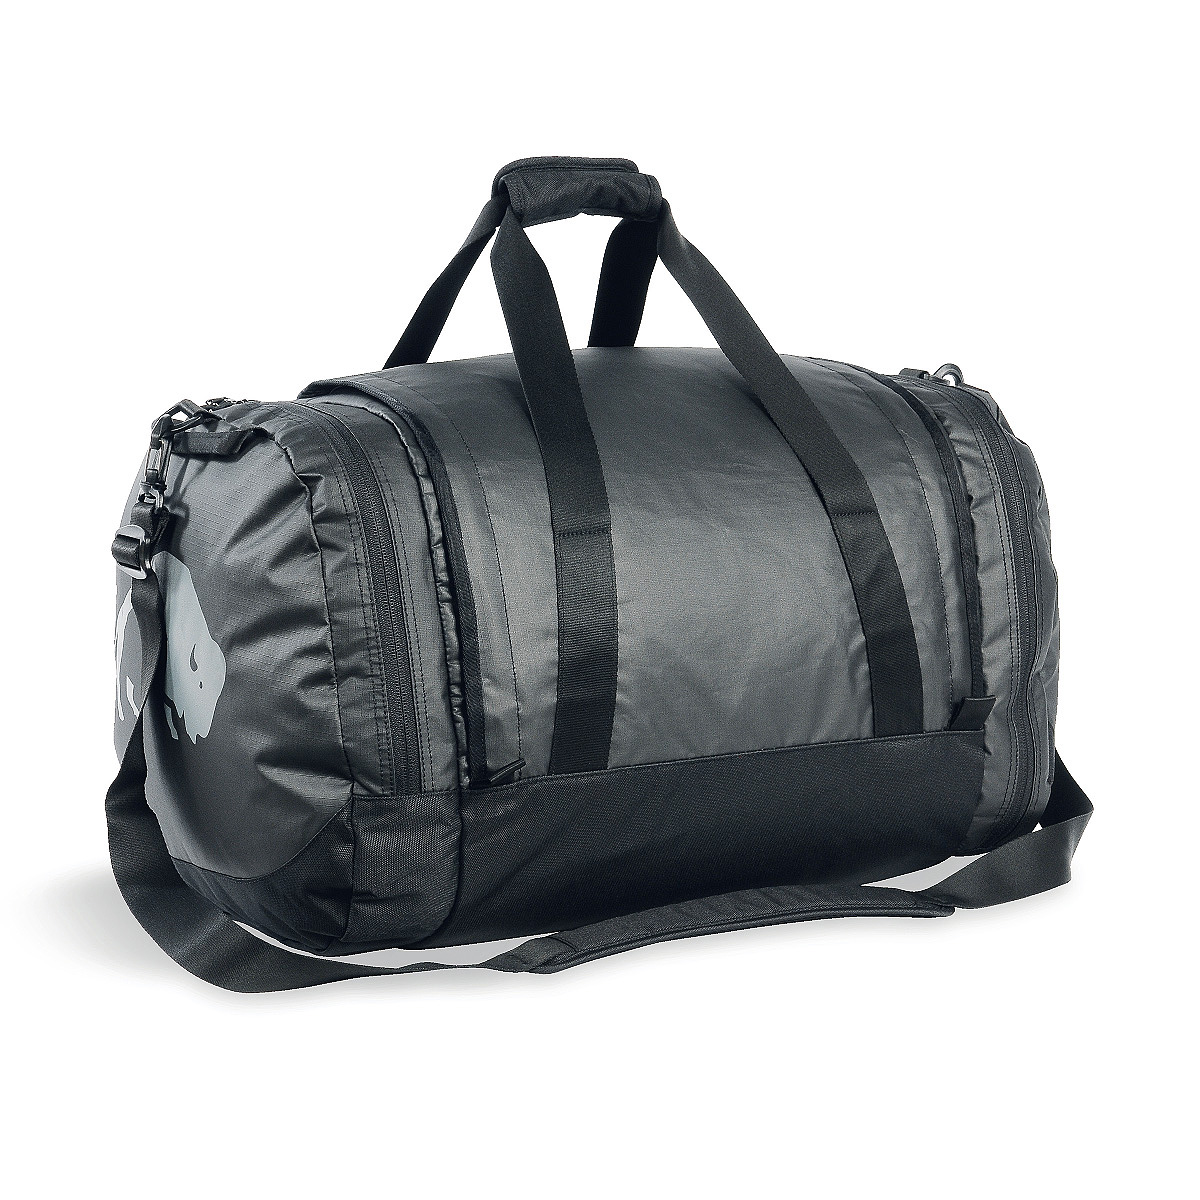 Складная дорожная сумка объемом 45 литров Tatonka Travel Duffle M black